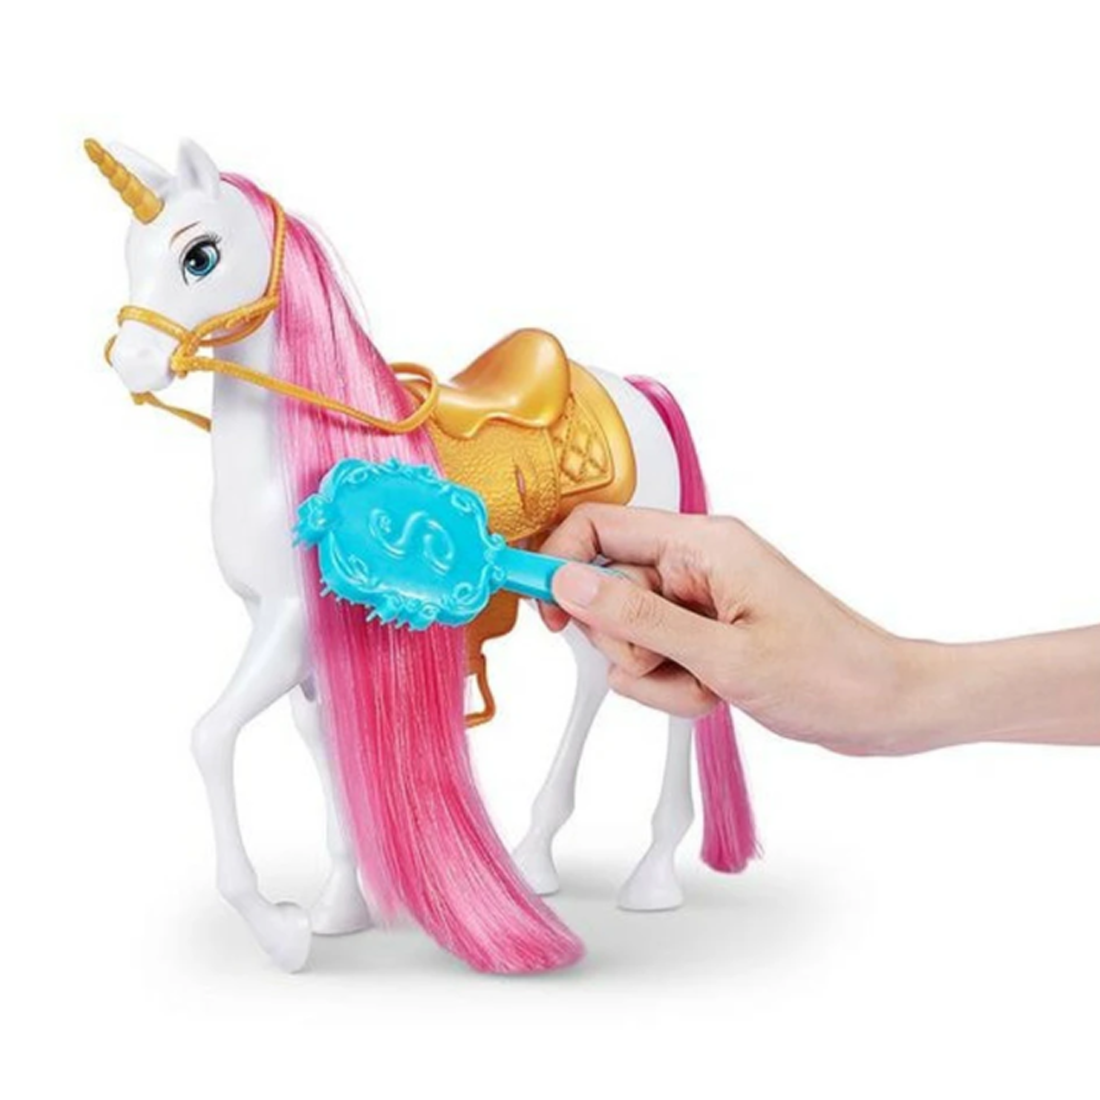 Sparkle Girlz Unicorn and Princess Doll with Carriage Set